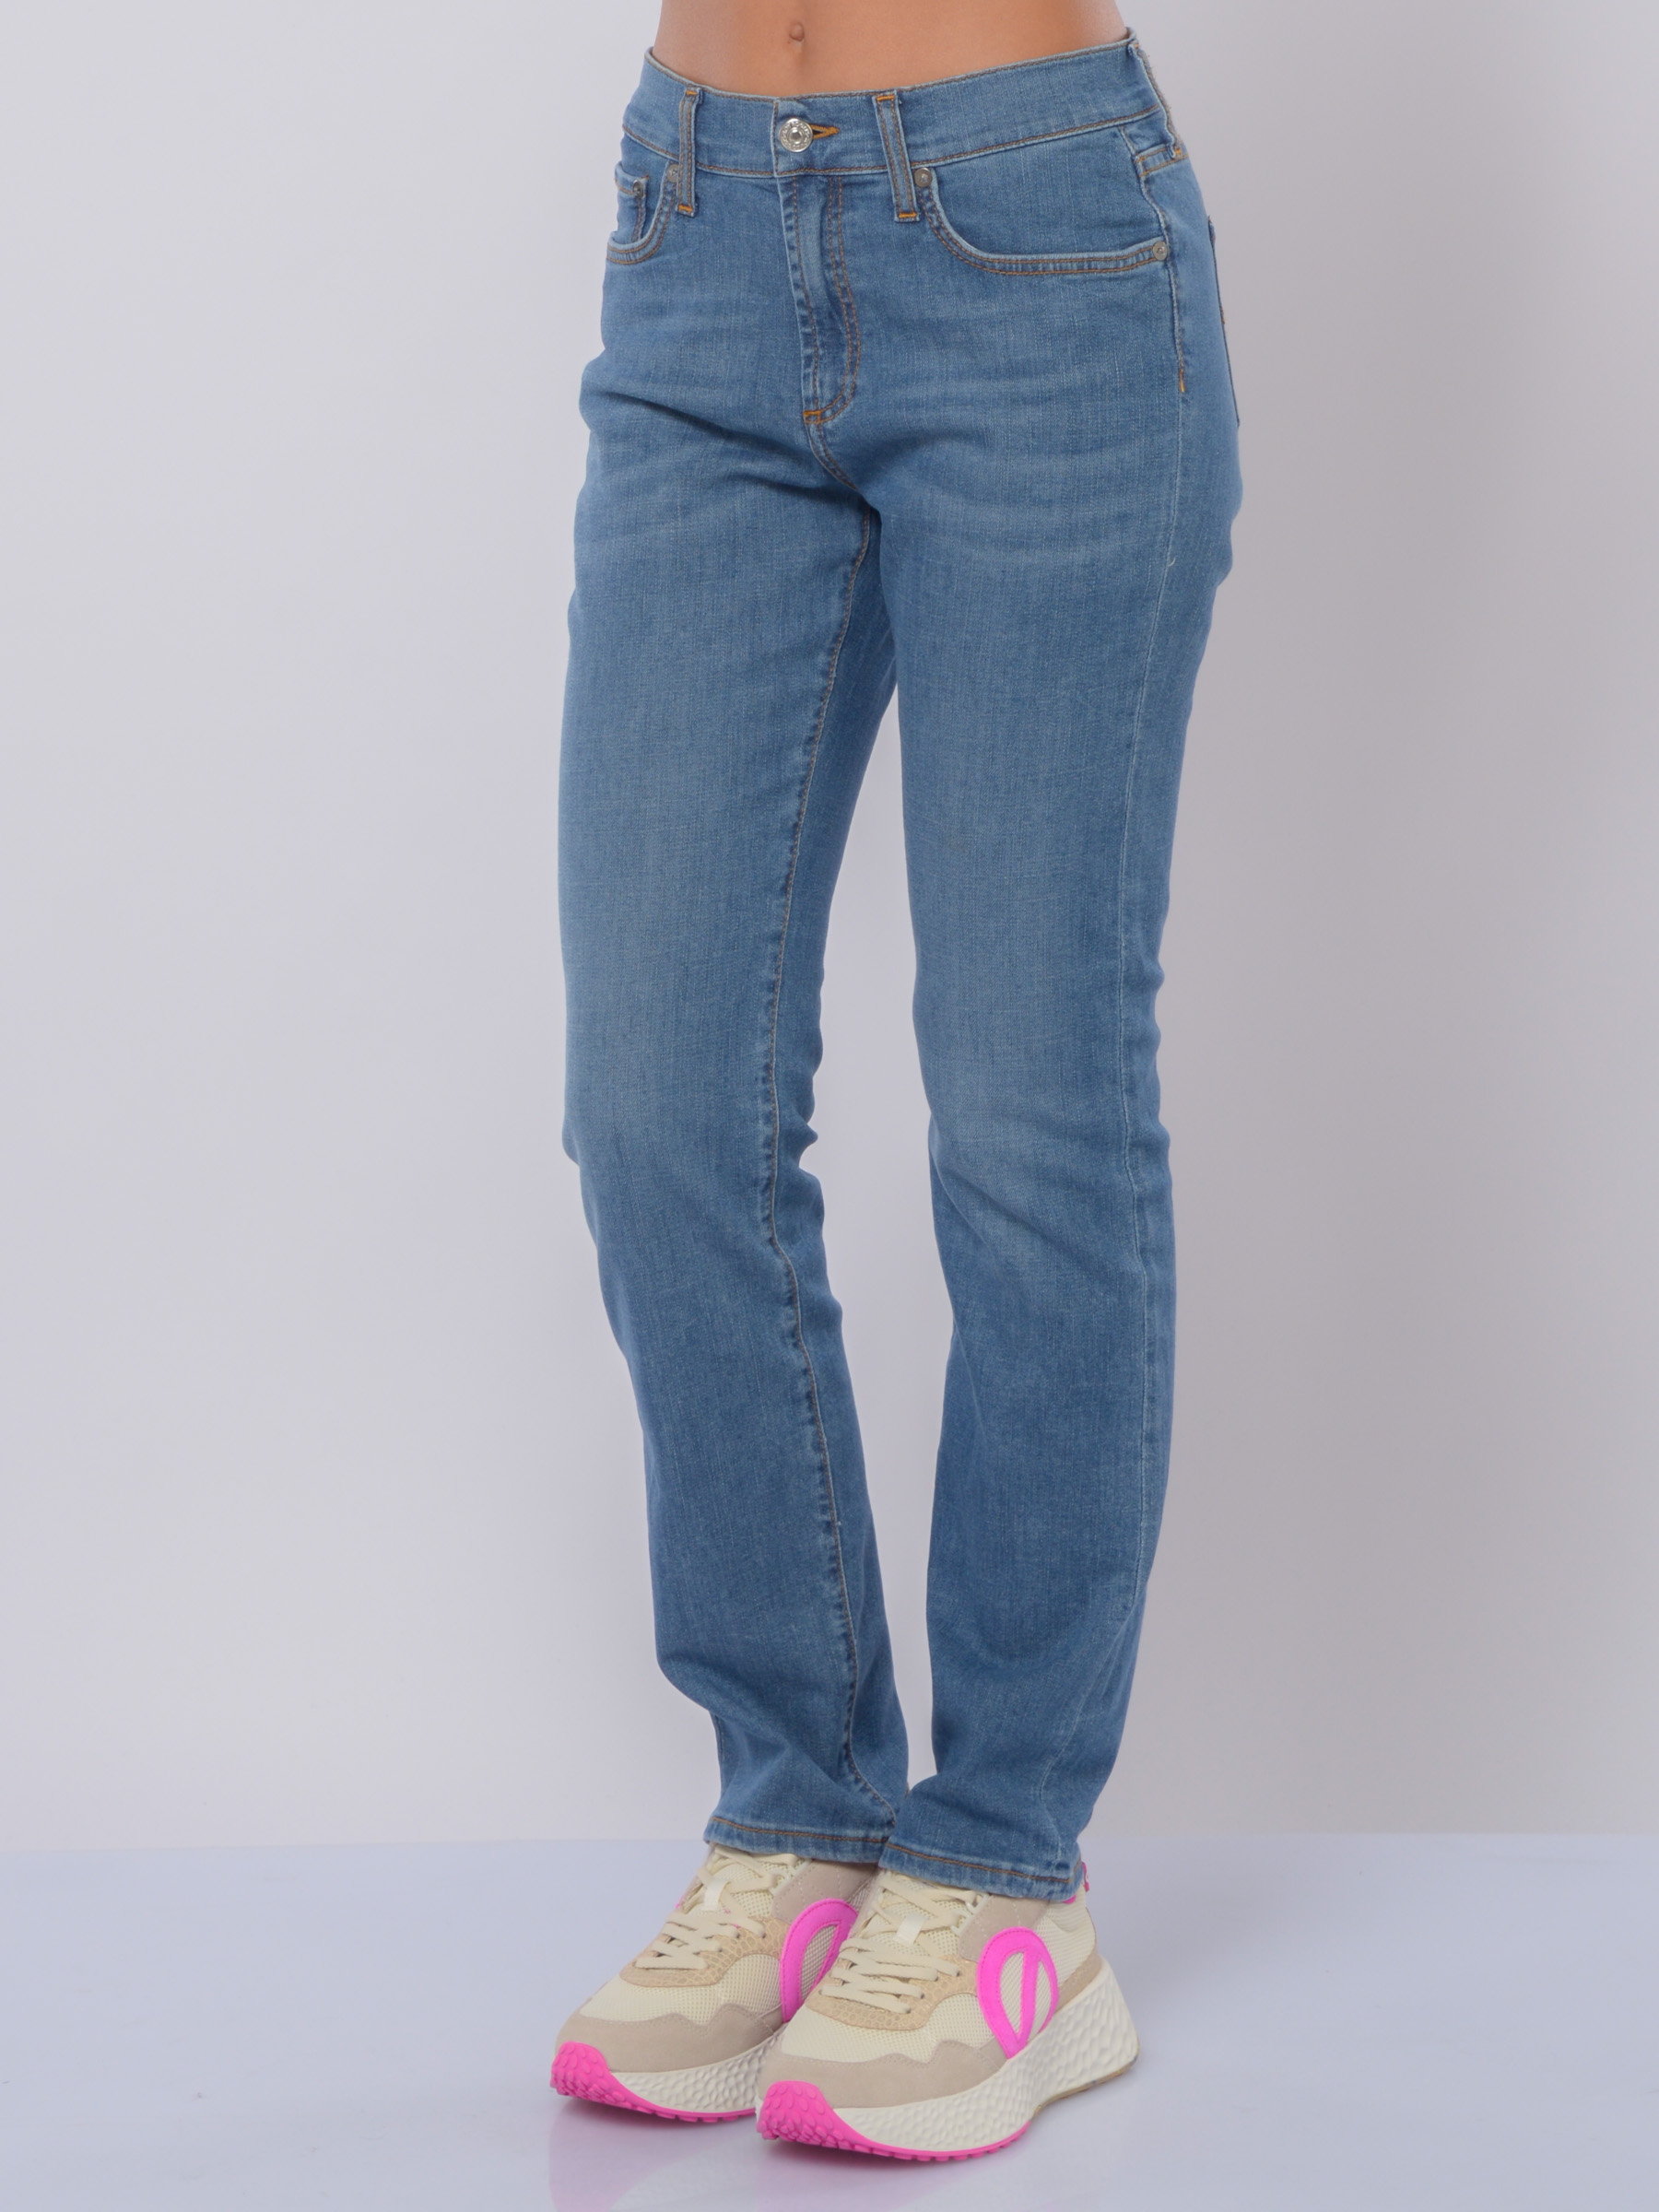 jeans da donna Roy Roger's Slim Fit con impunture